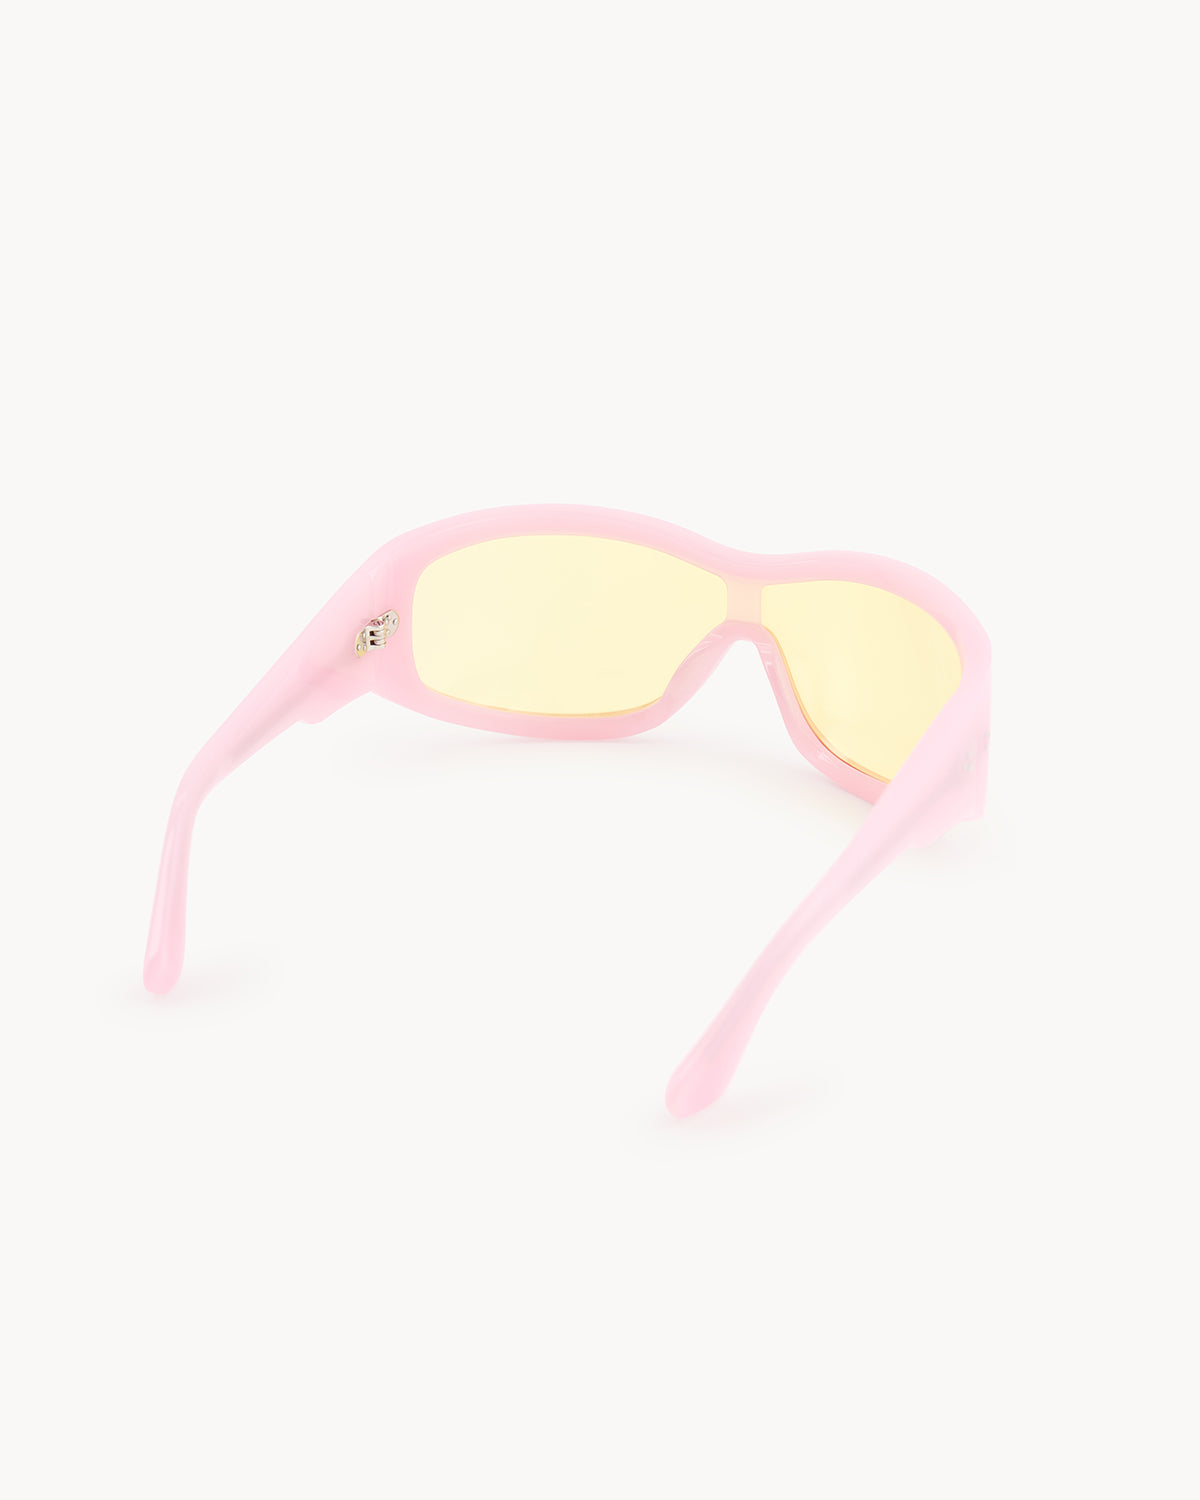 Port Tanger Nunny Sunglasses in Muddy Pink Acetate and Tangerine Lenses 3